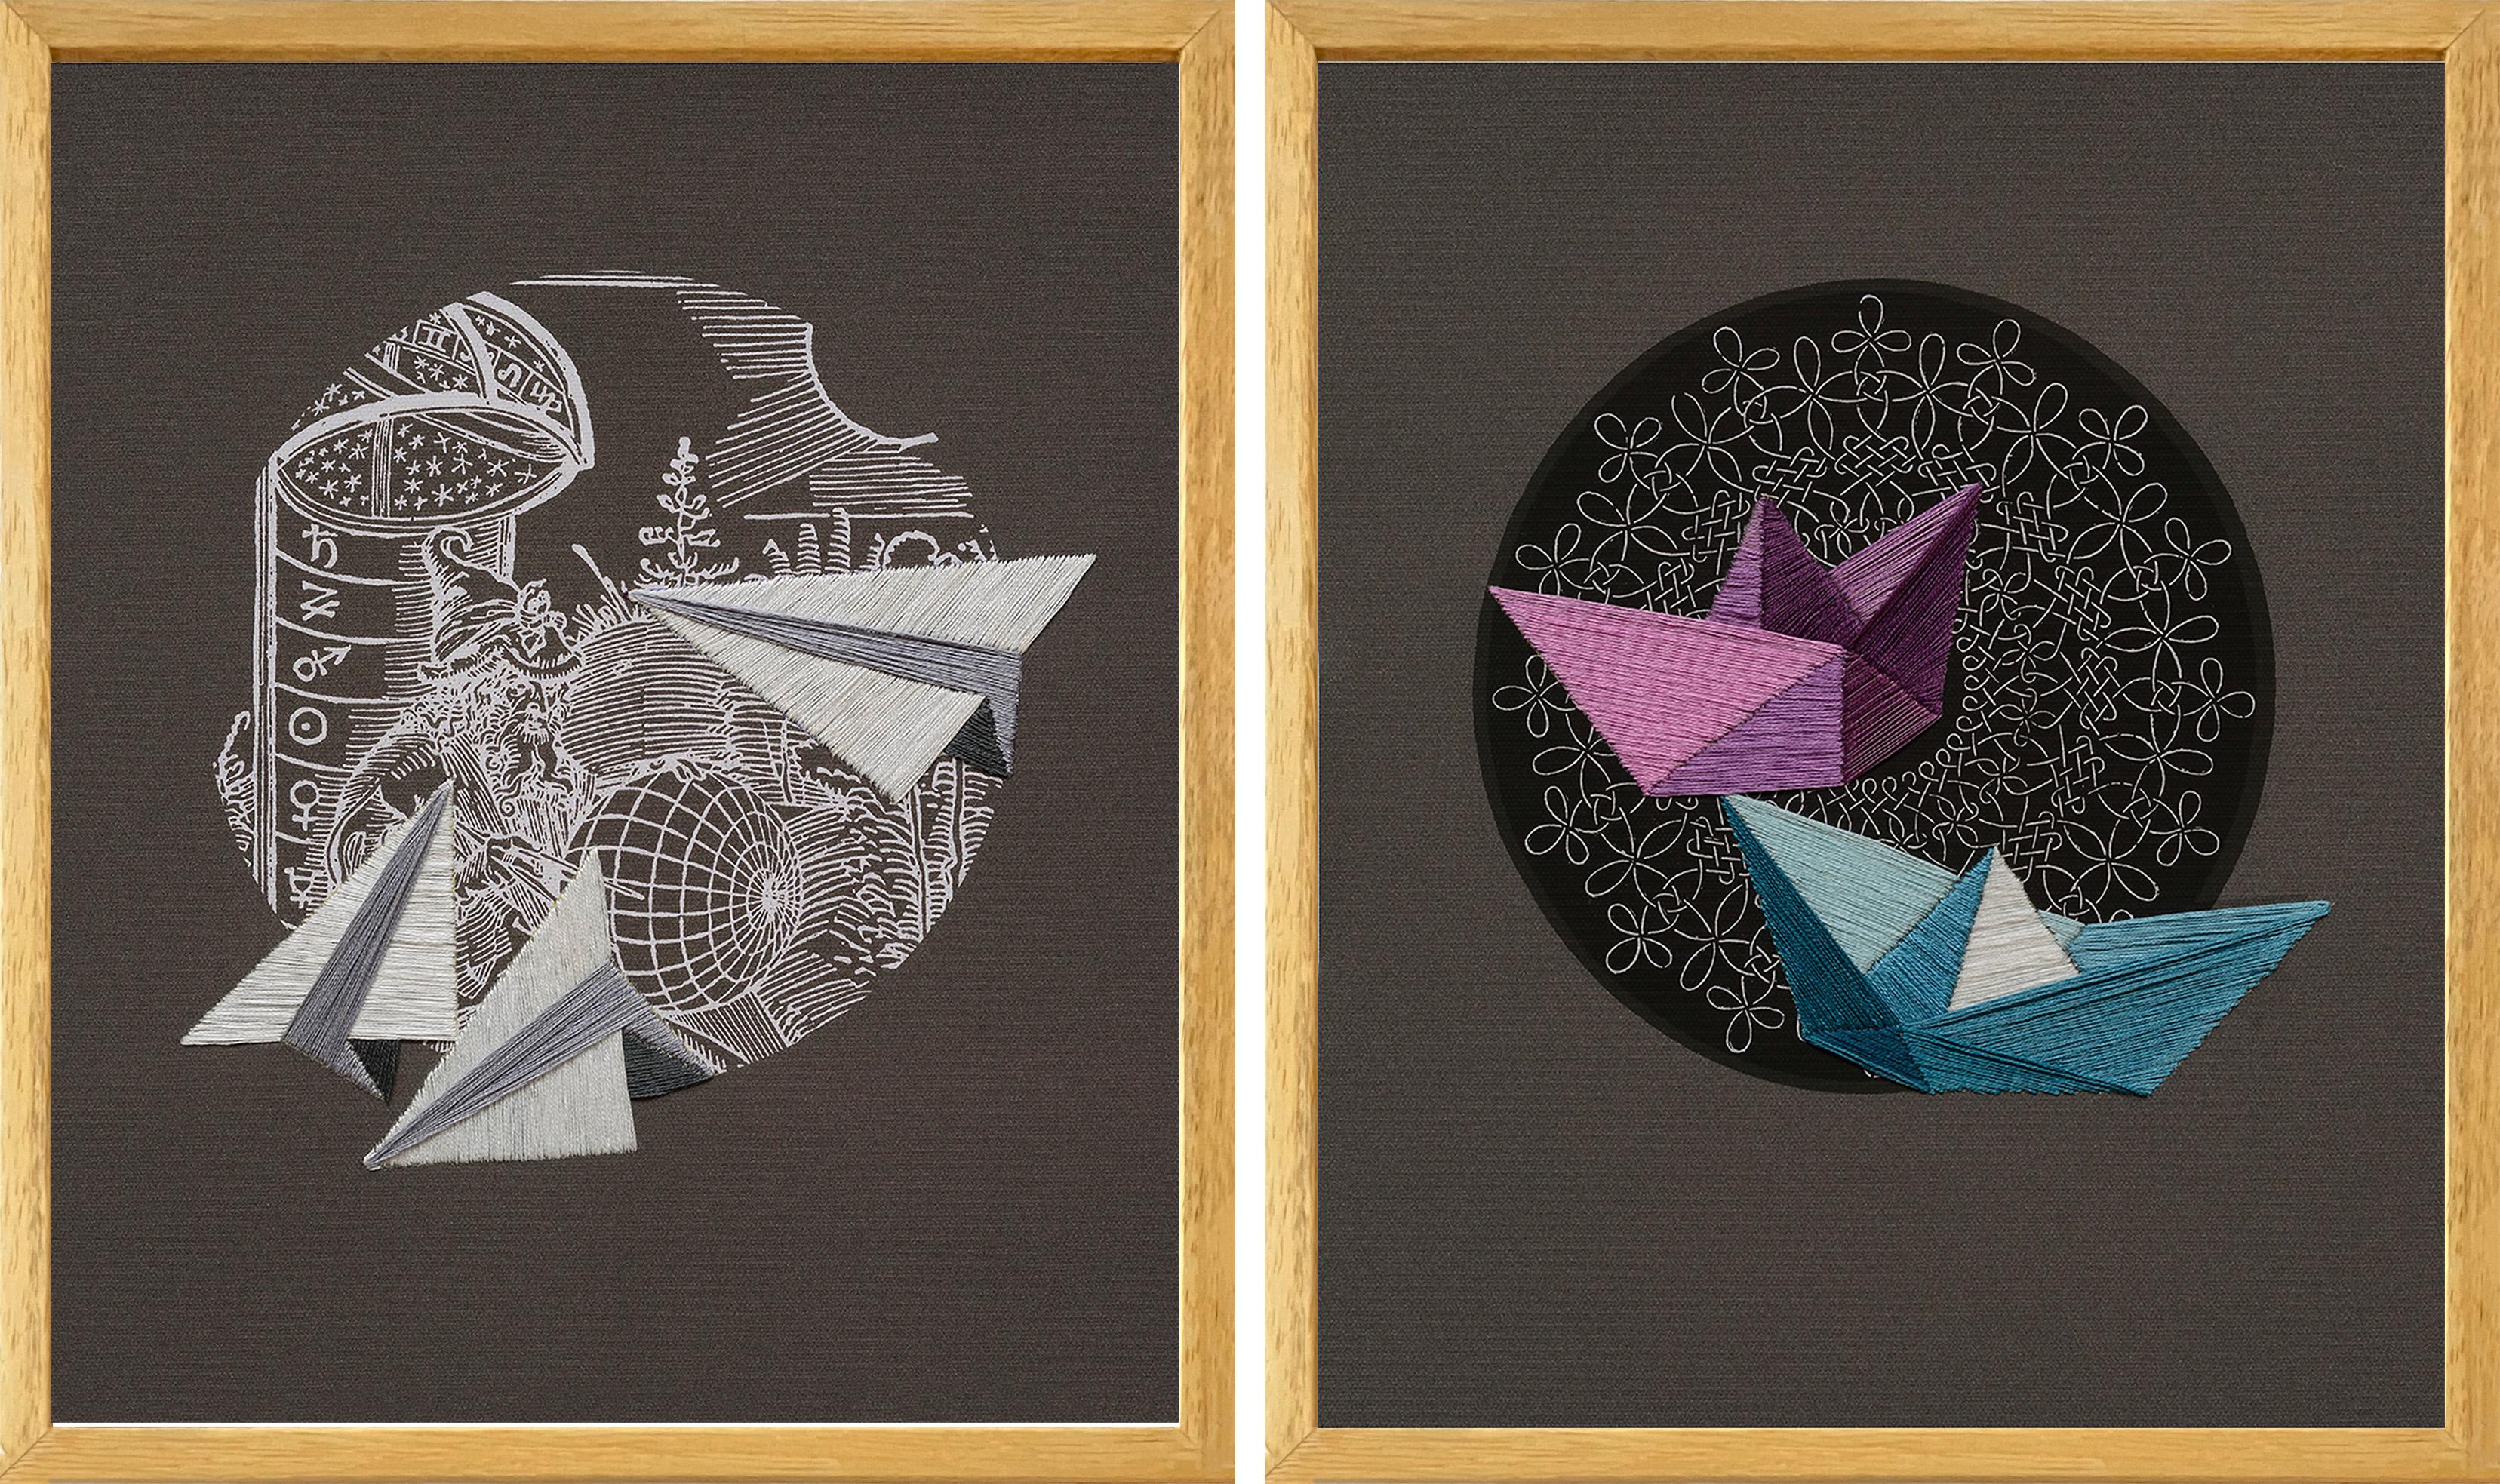 El Mago, and Náufragos inminentes Diptych. Textile Art From The Series Durero  - Contemporary Mixed Media Art by Ana Seggiaro